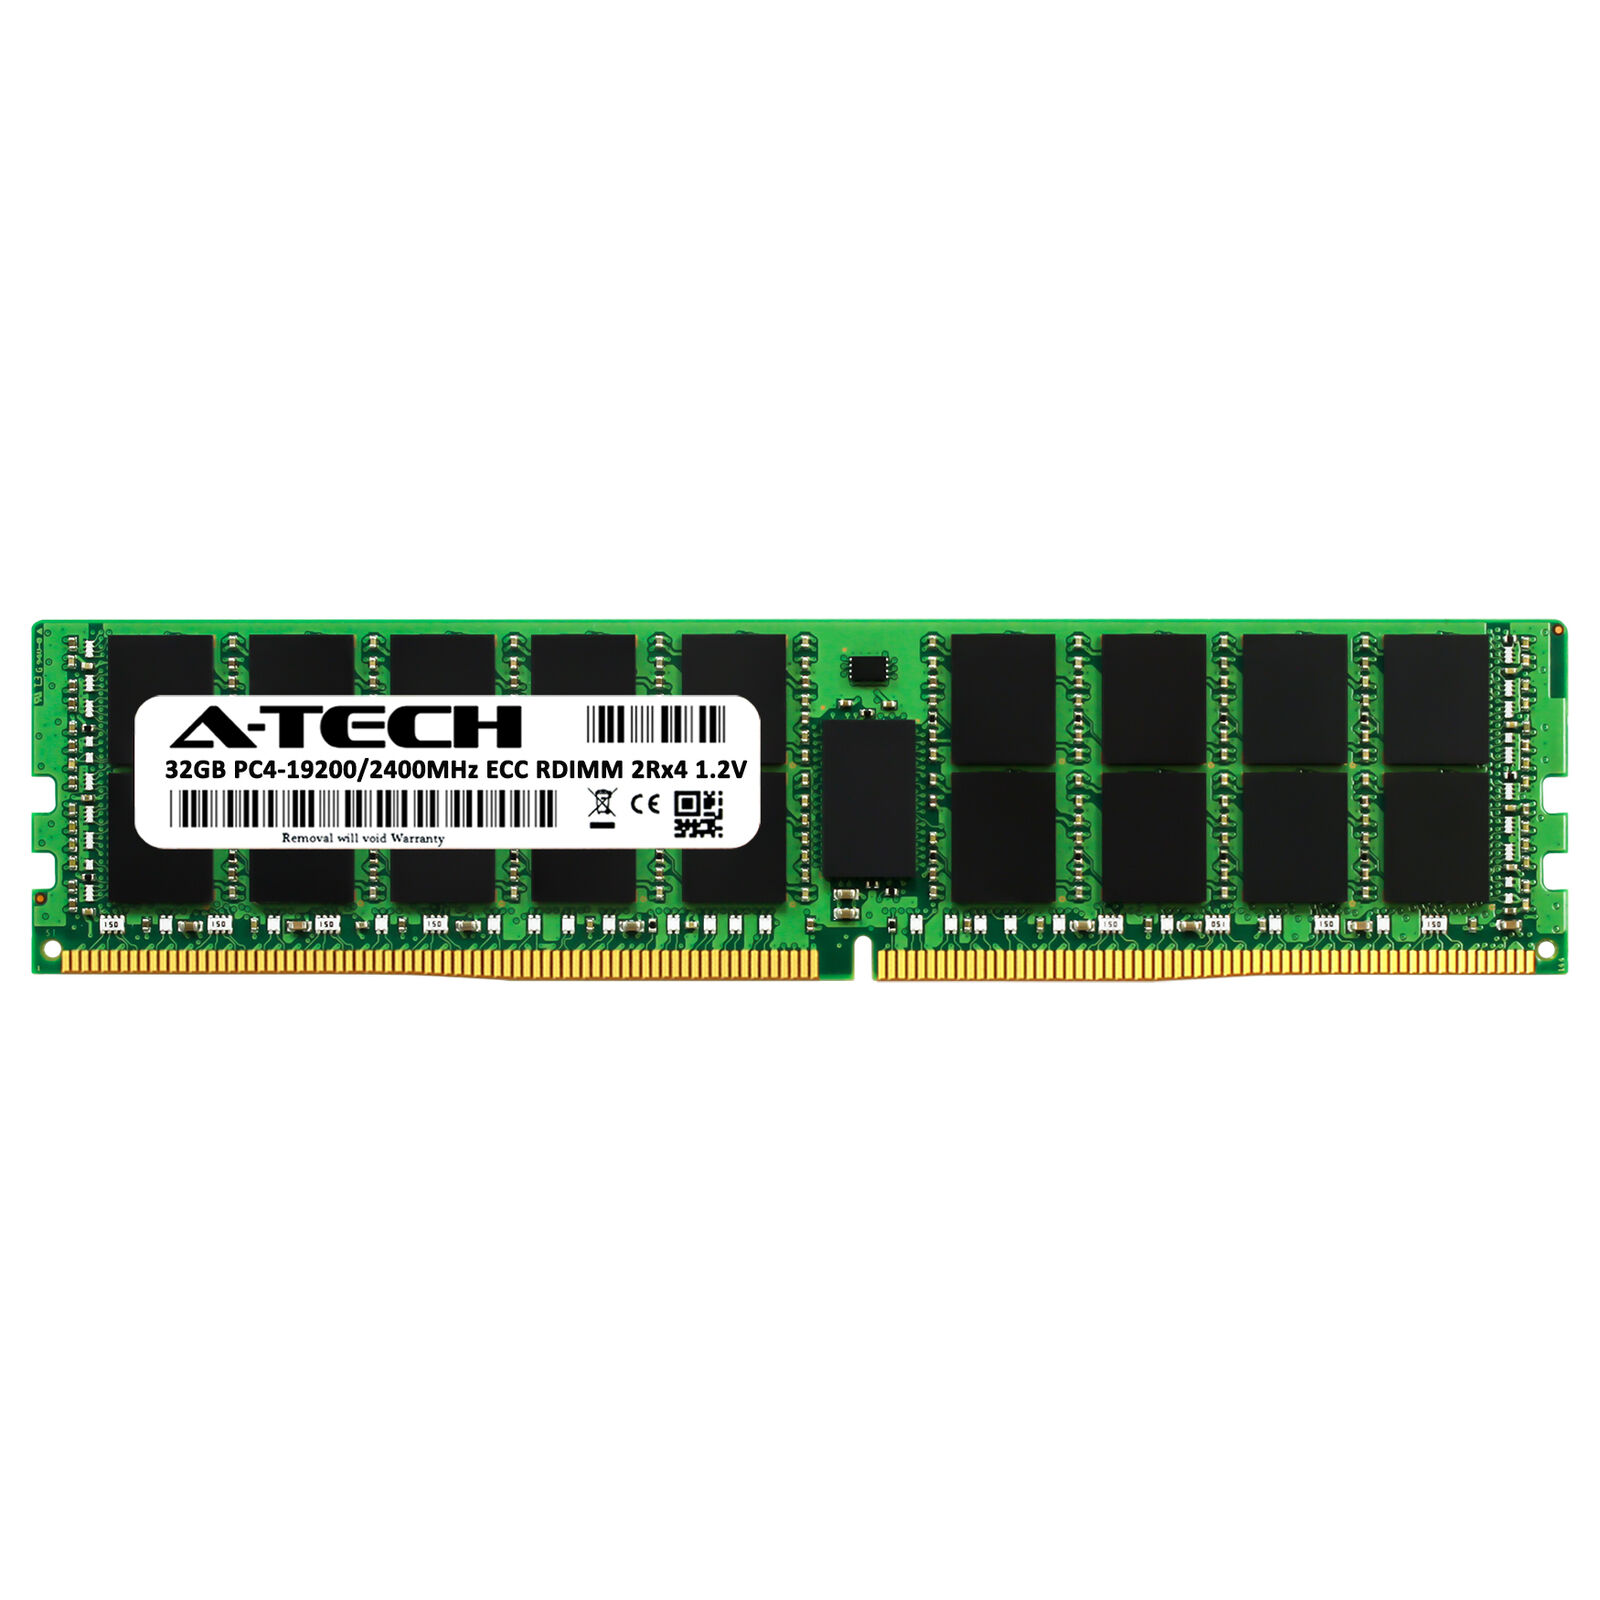 A-Tech 32GB DDR4 2400 PC4-19200 ECC REG DIMM for Dell PowerEdge R740 Memory RAM